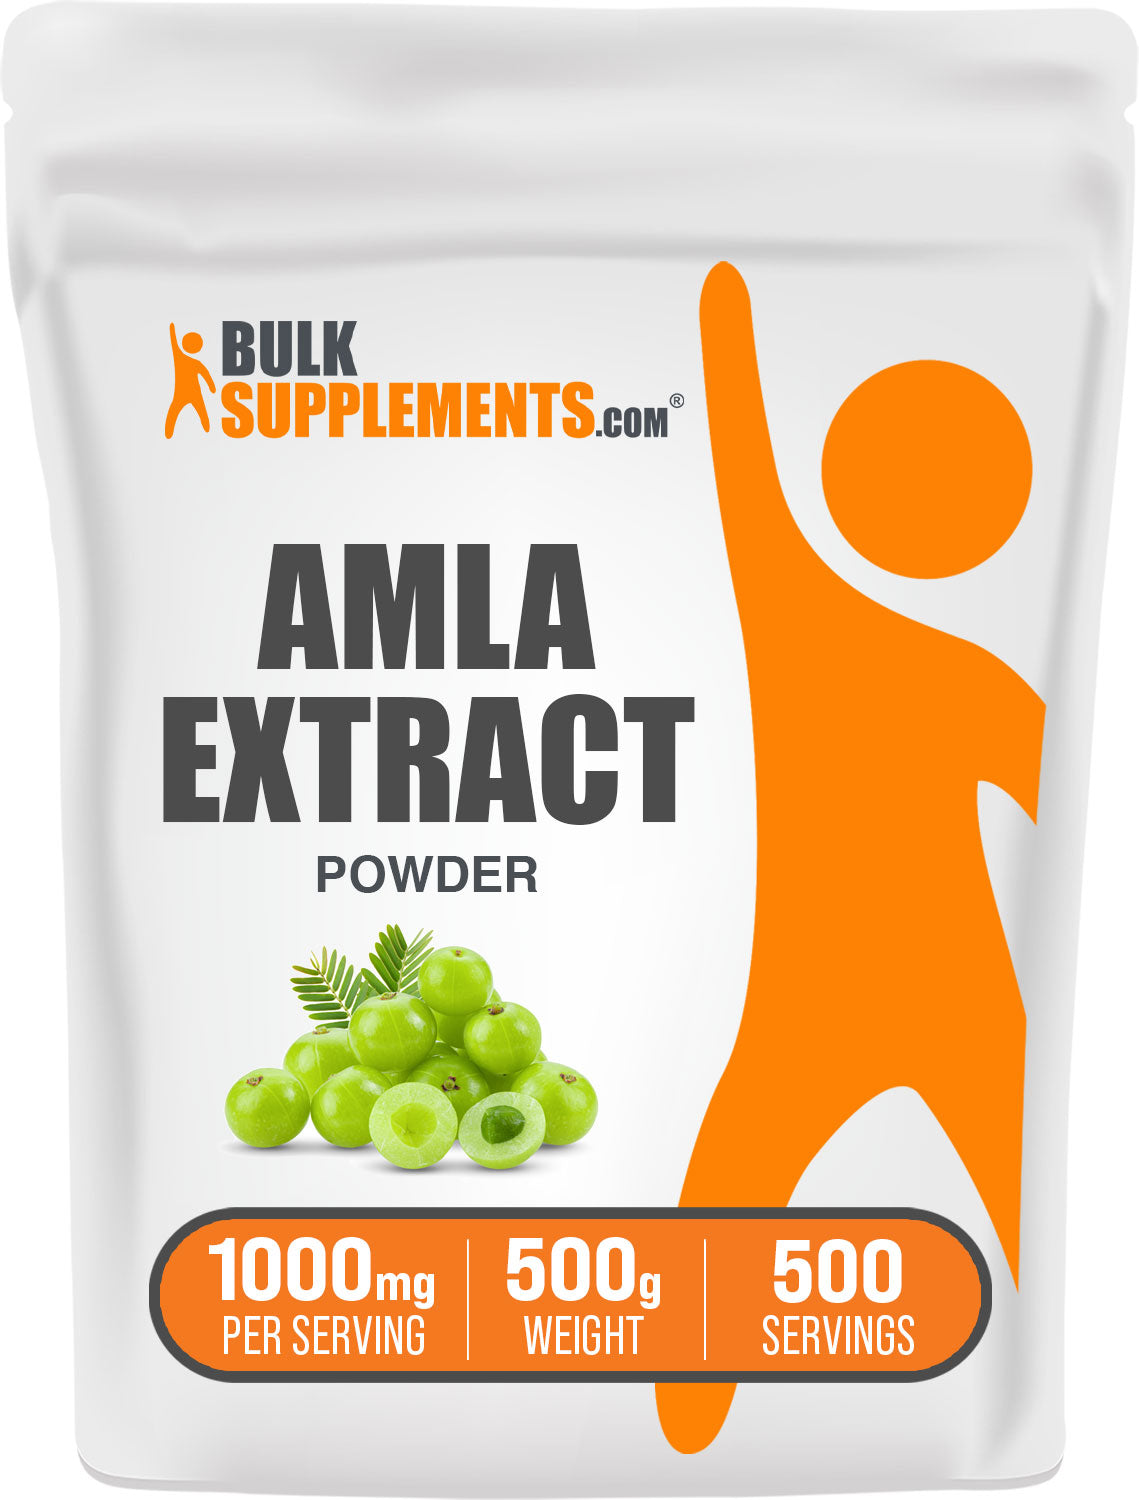 BulkSupplements.com Amla Extract Powder 500g Bag